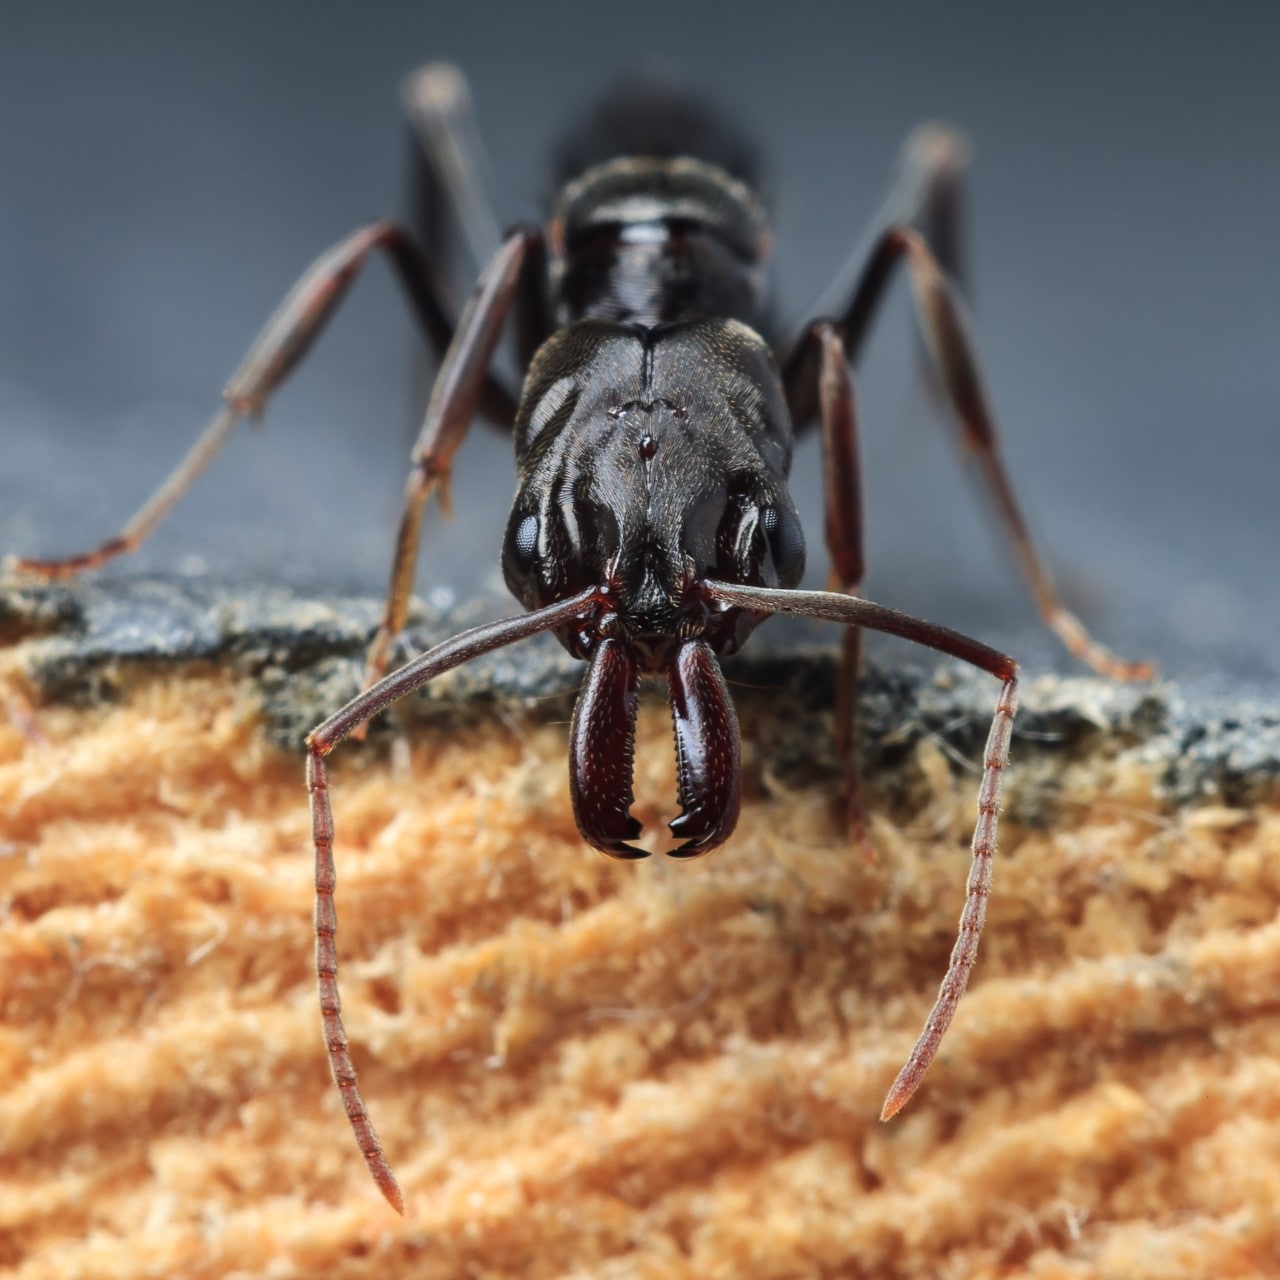 Trap jaw ants (Odontomachus bauri)